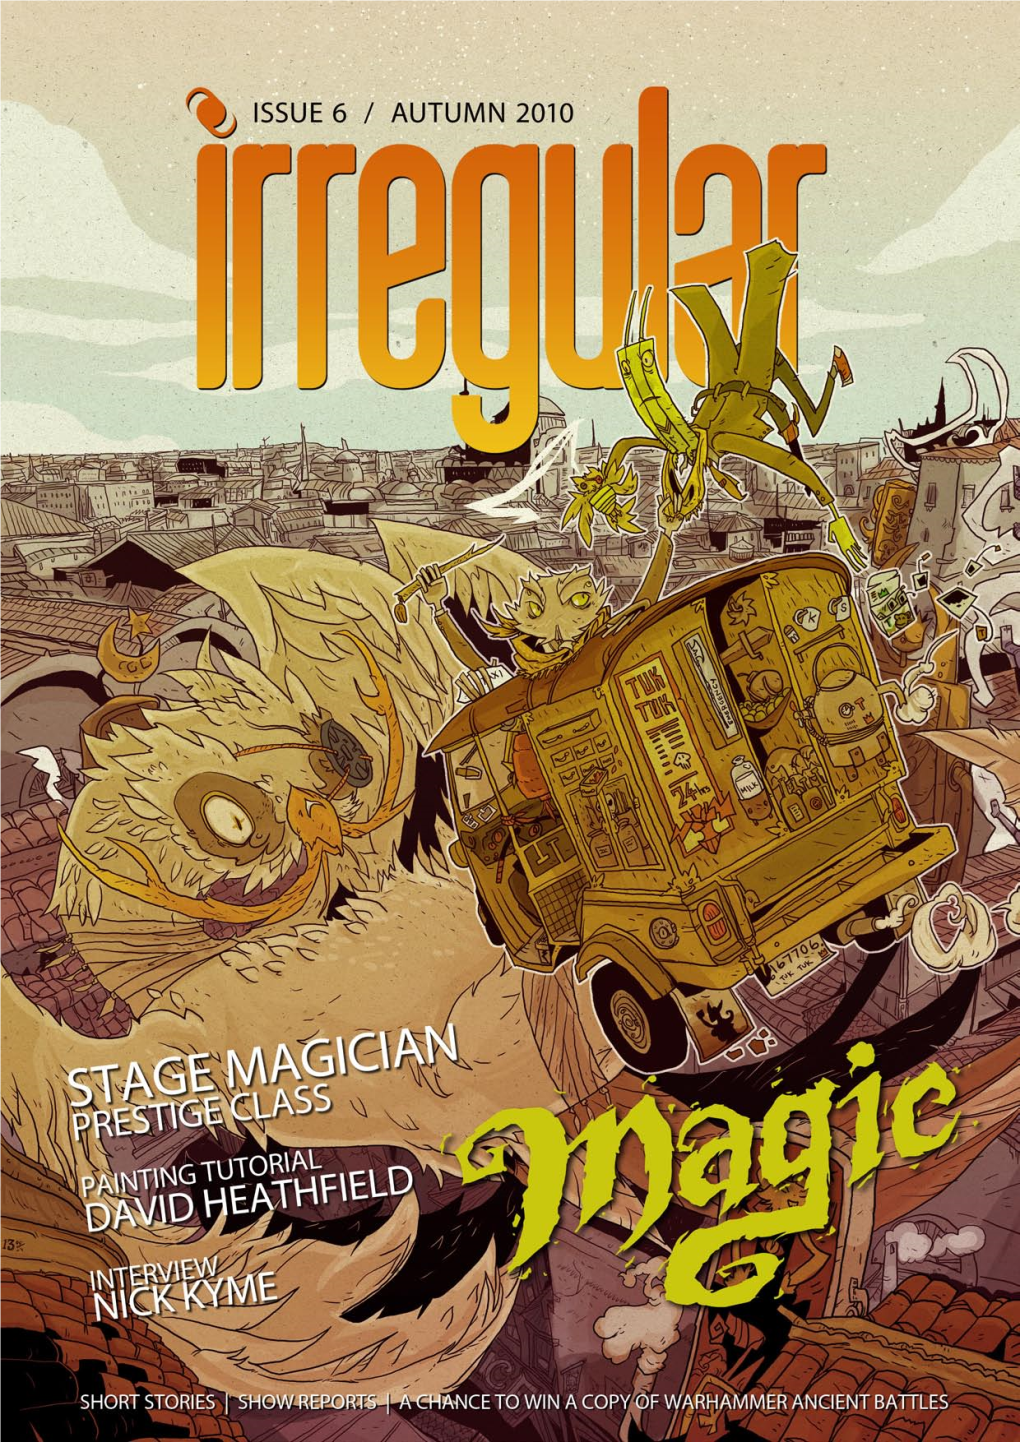 Issue 6 2010.Indb